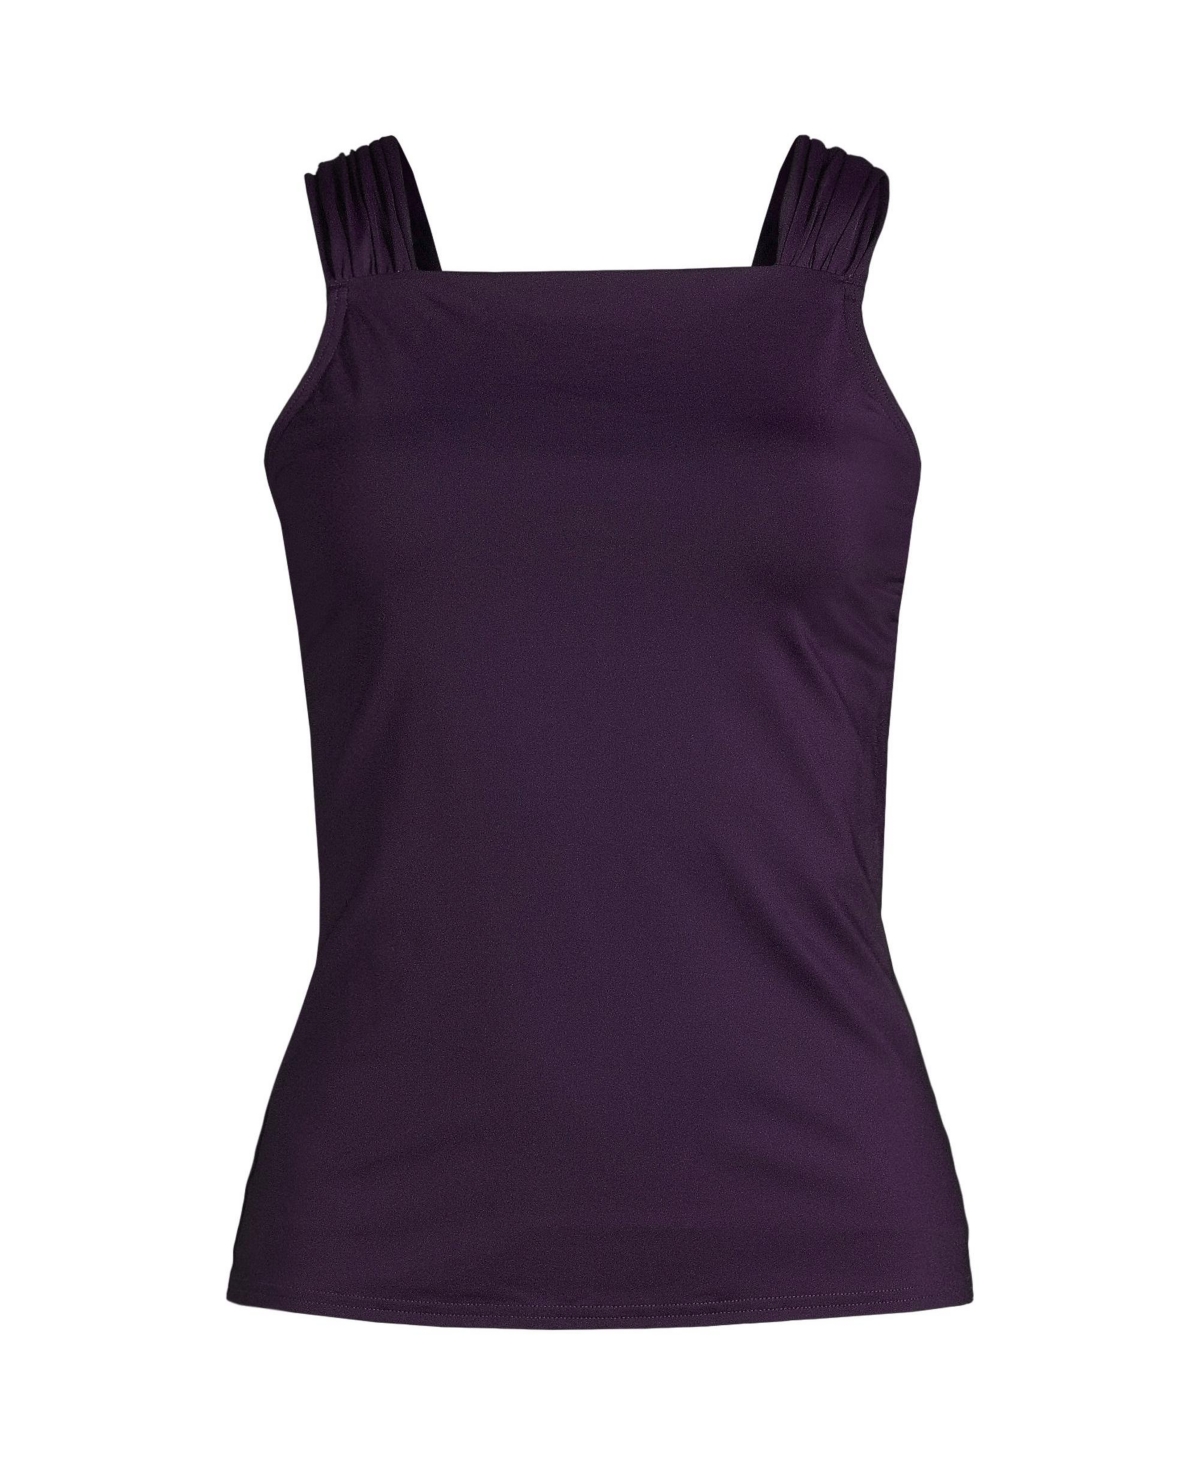 Women's D-Cup Chlorine Resistant Cap Sleeve High Neck Tankini Swimsuit Top - Blackberry